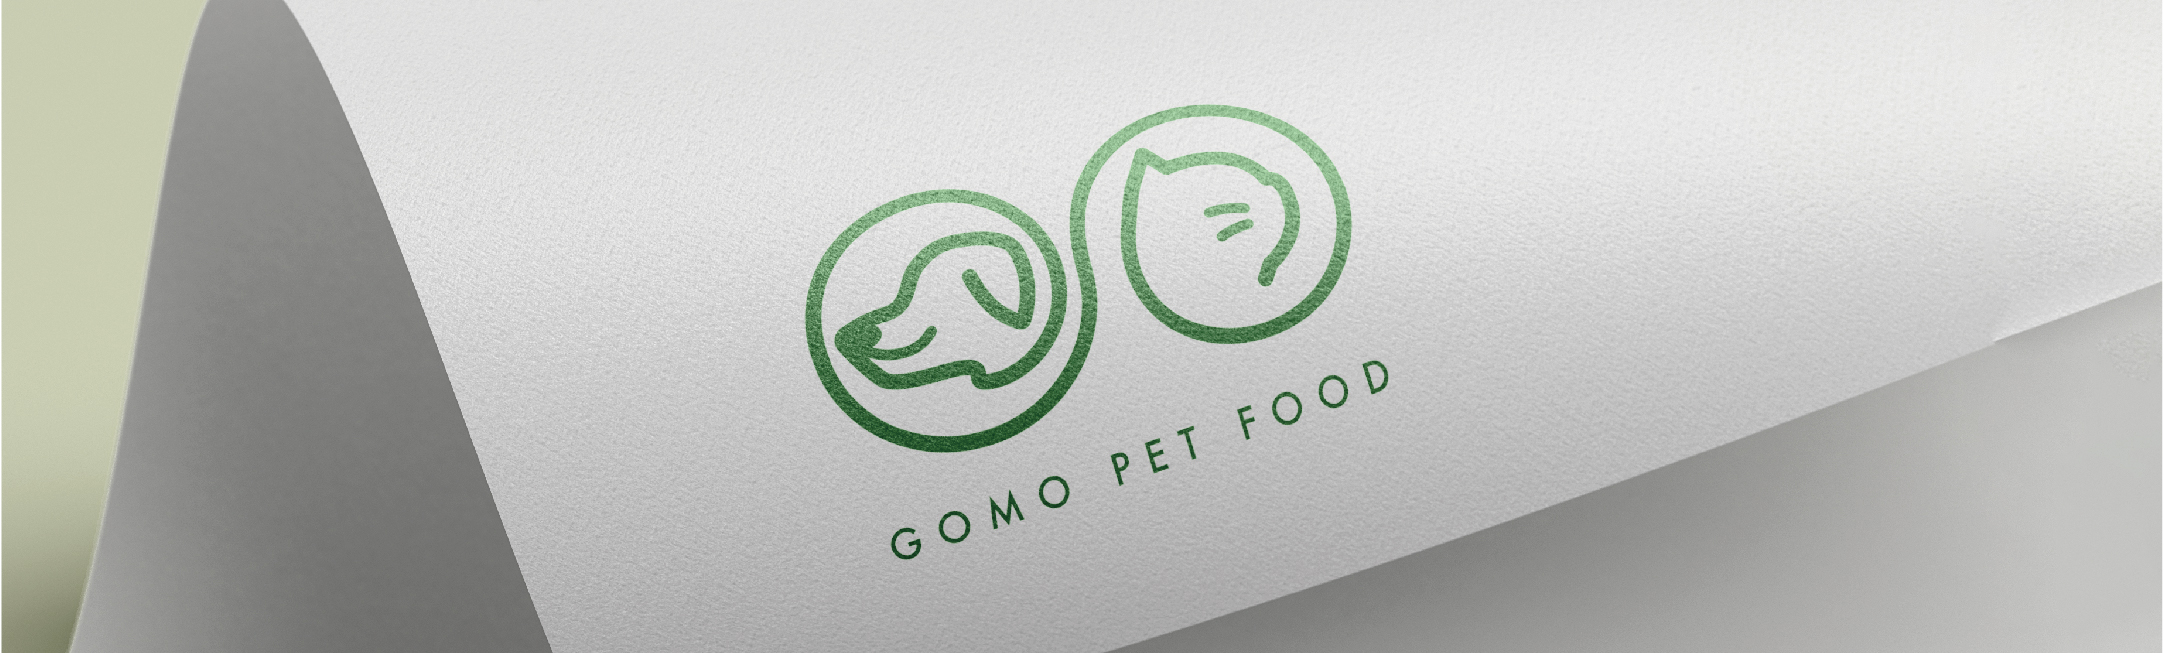 GOMO PET FOOD的經營團隊專注於滿足毛孩需求和飼主需求，注意食材安全與營養，天然健康食材讓毛孩貓犬健康與成長